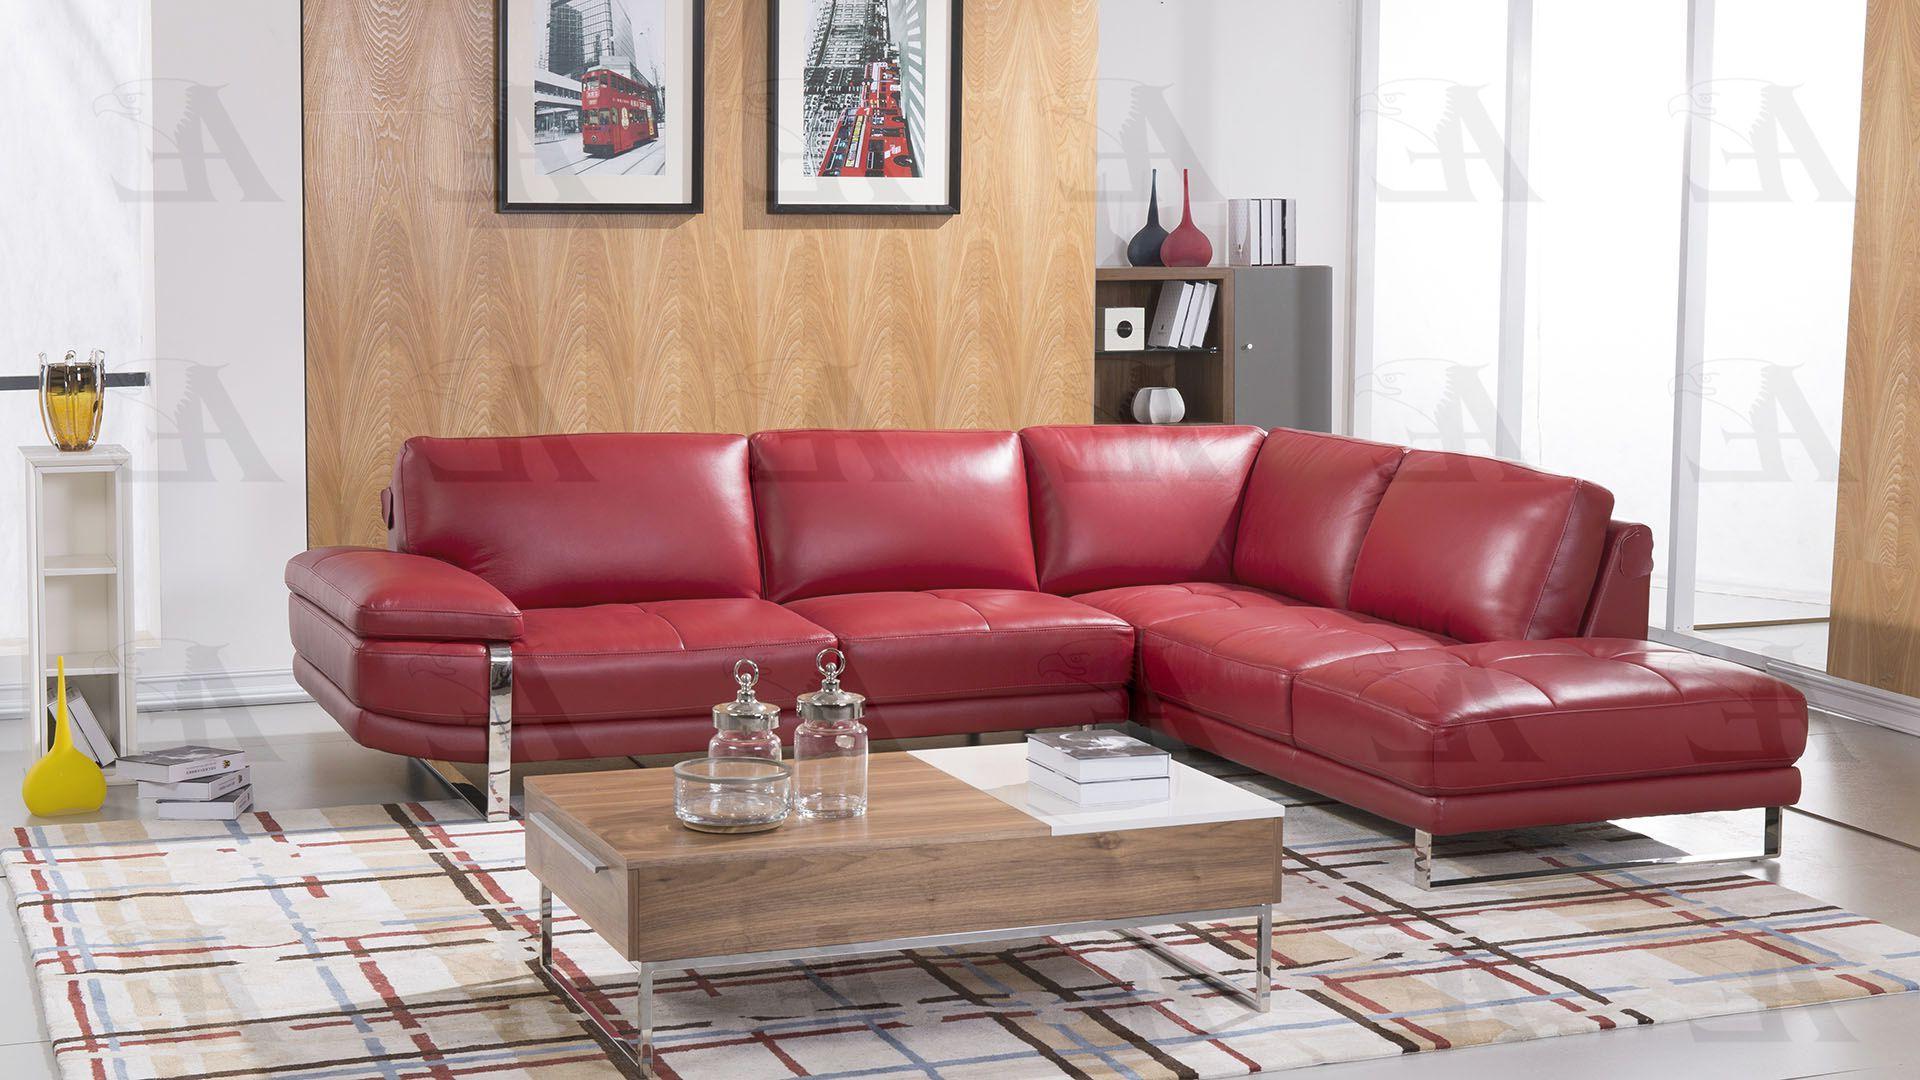 

        
American Eagle Furniture EK-L025-RED Sectional Sofa Red Italian Leather 00656237666801
